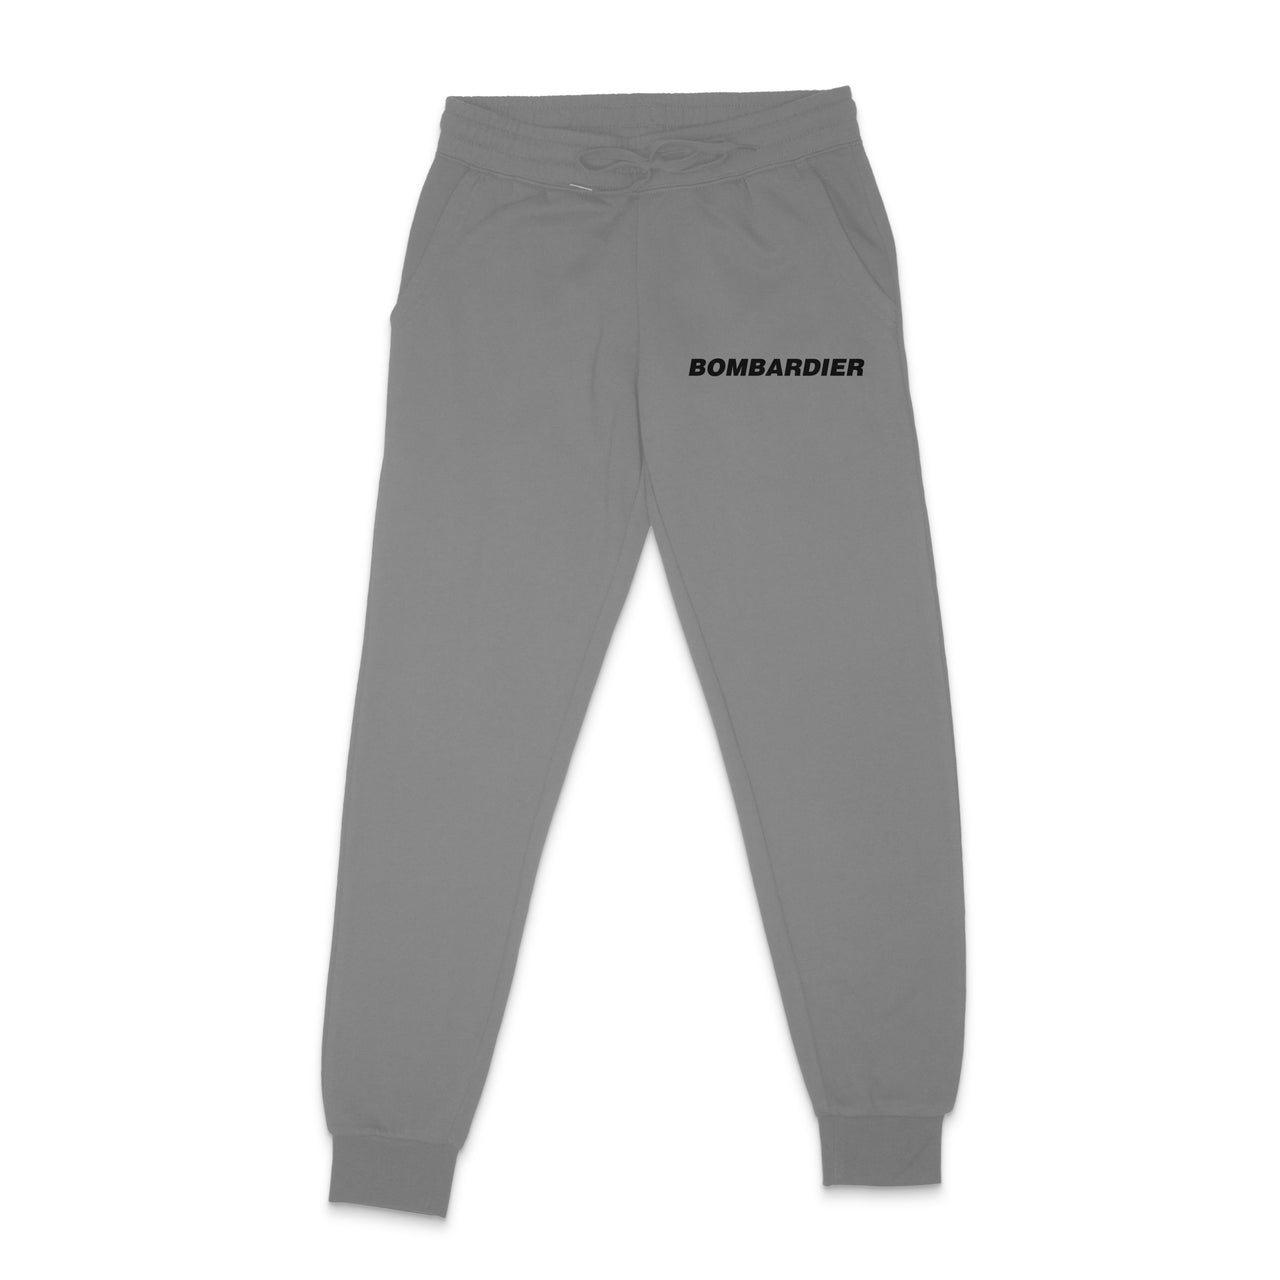 Bombardier & Text Designed Sweatpants